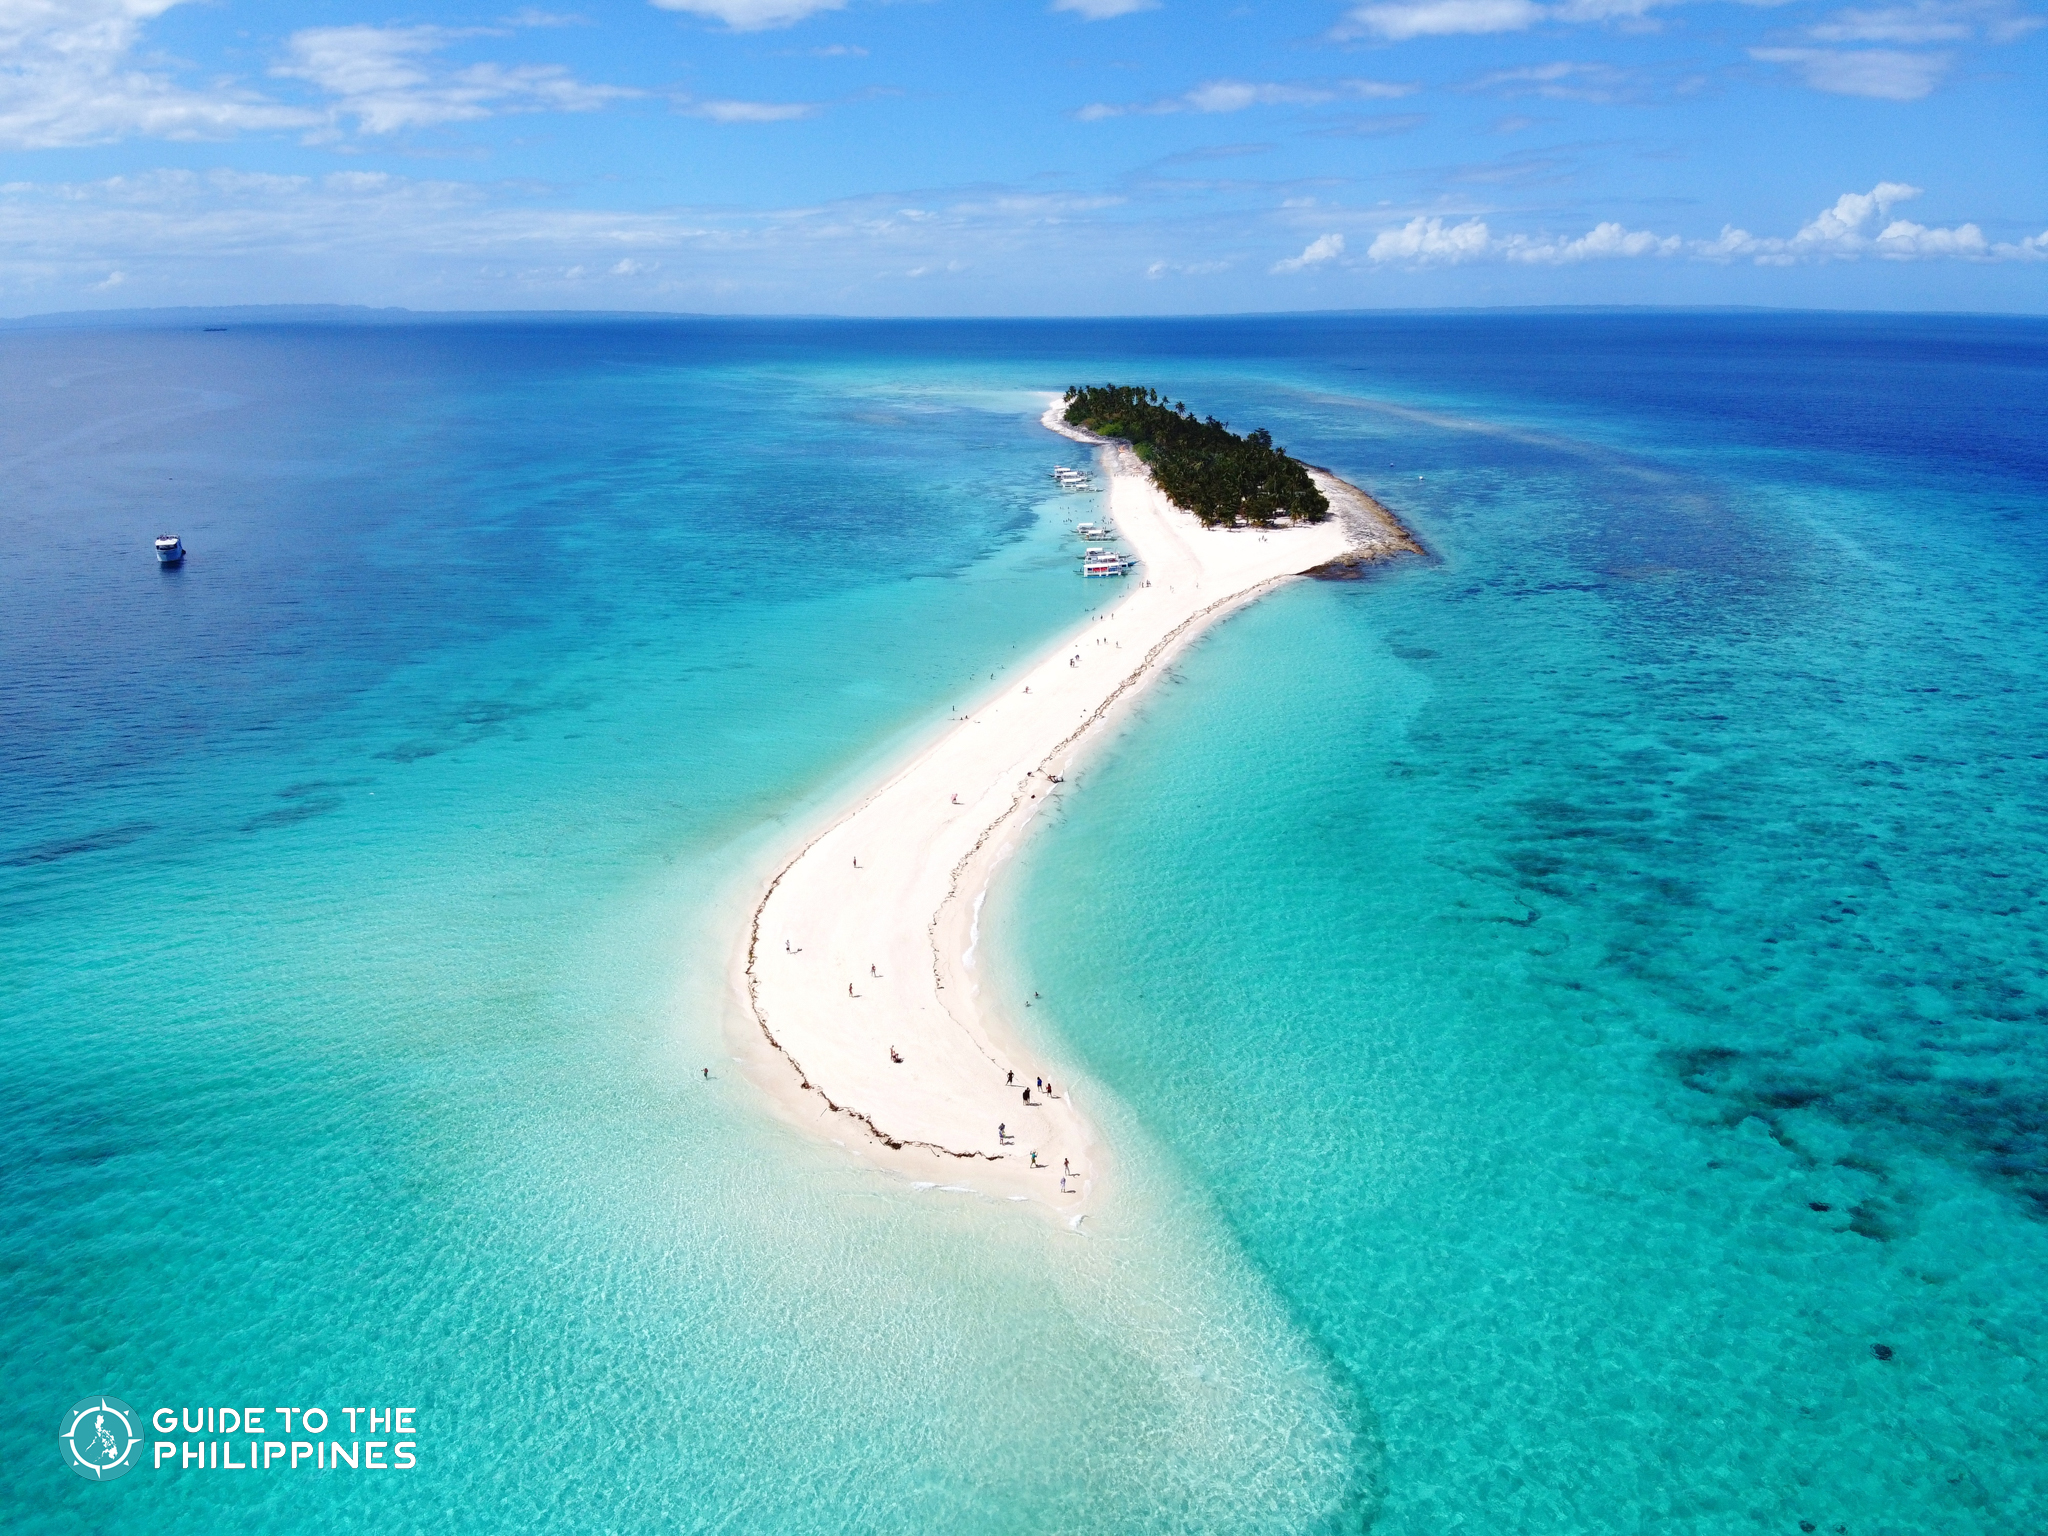 15 Must-Visit Visayas Tourist Spots: Boracay White Beach, Cebu Diving, Bohol Countryside